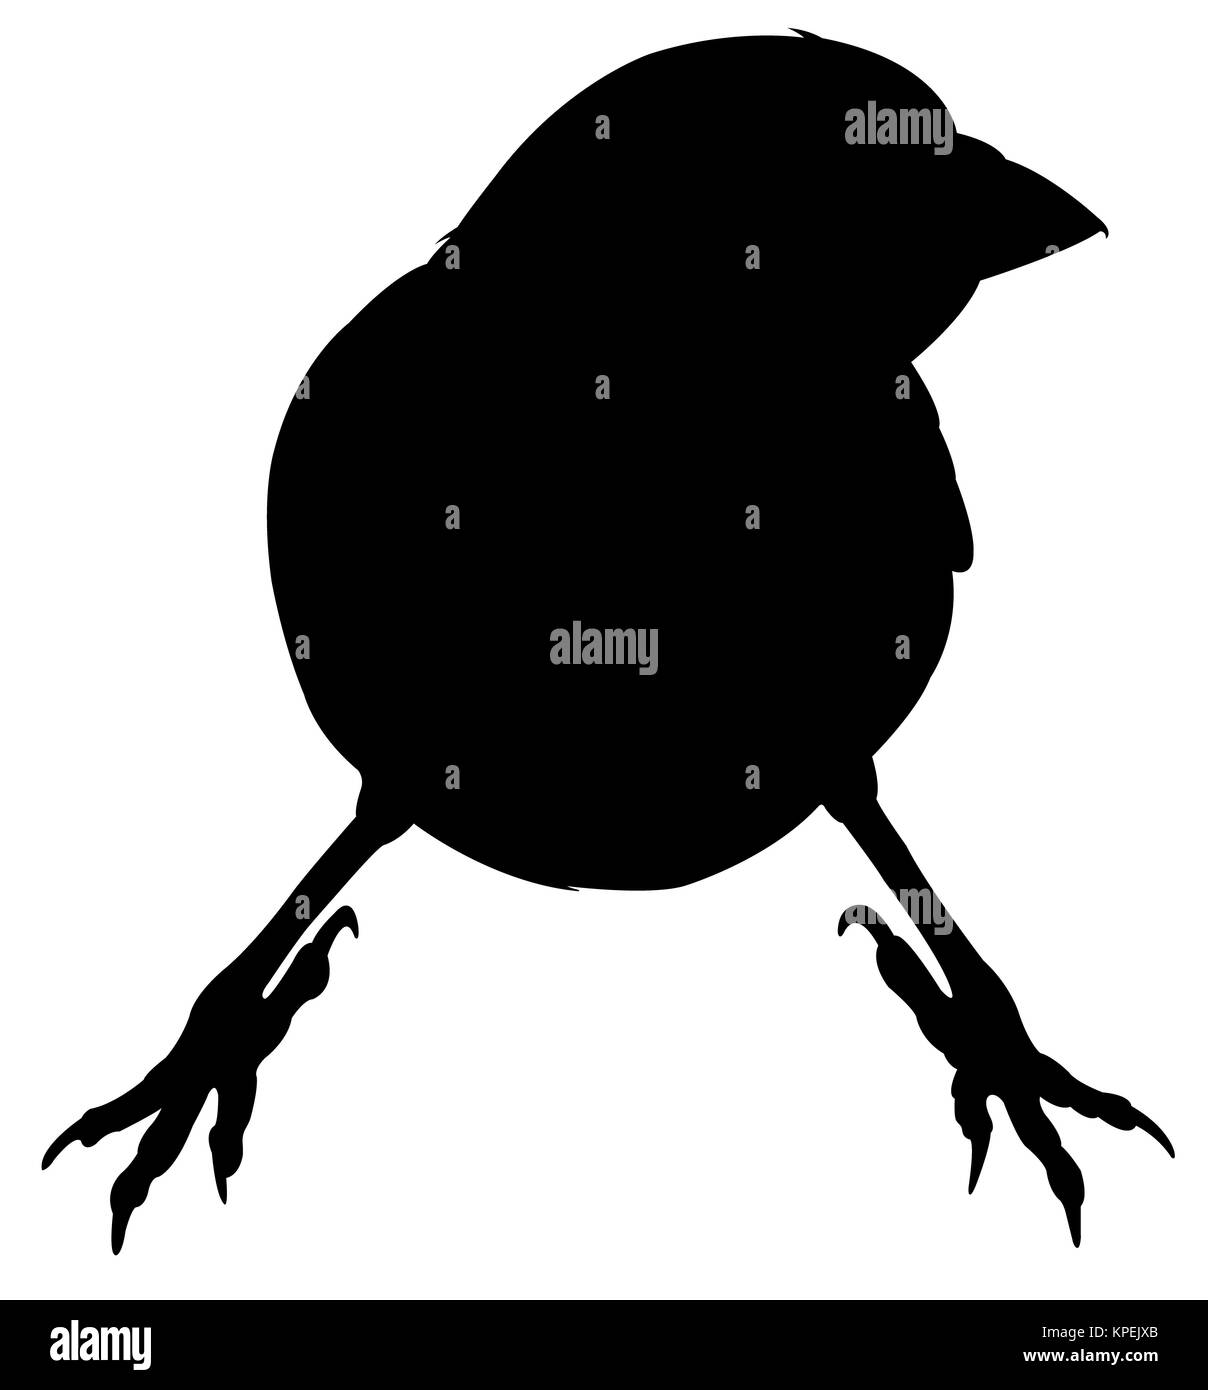 a sparrow silhouette Stock Photo